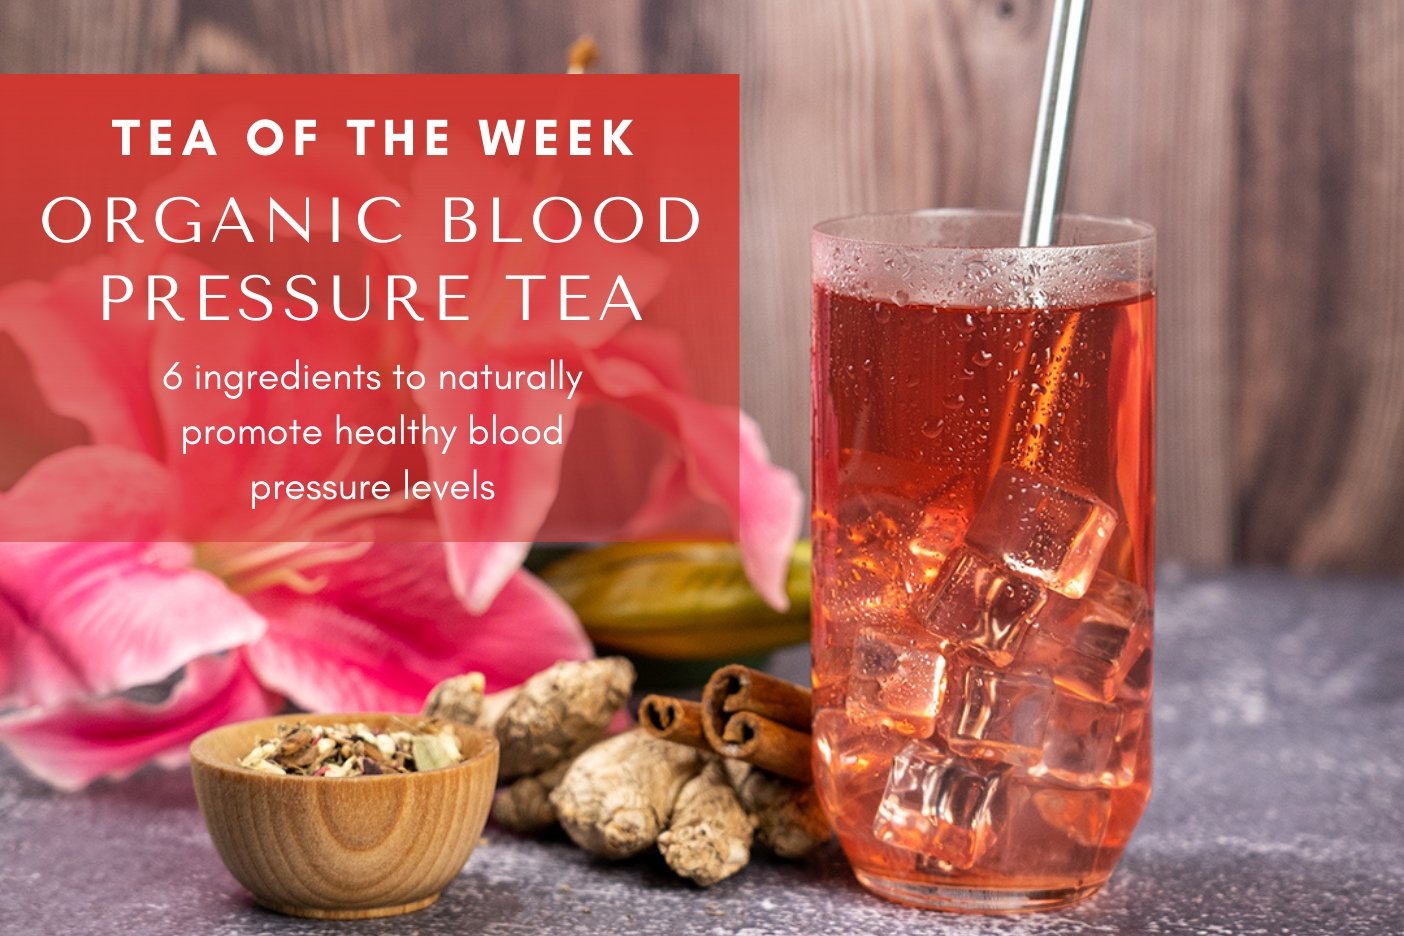 Organic Blood Pressure Tea 🌺 | Tea of the Week - Full Leaf Tea Company